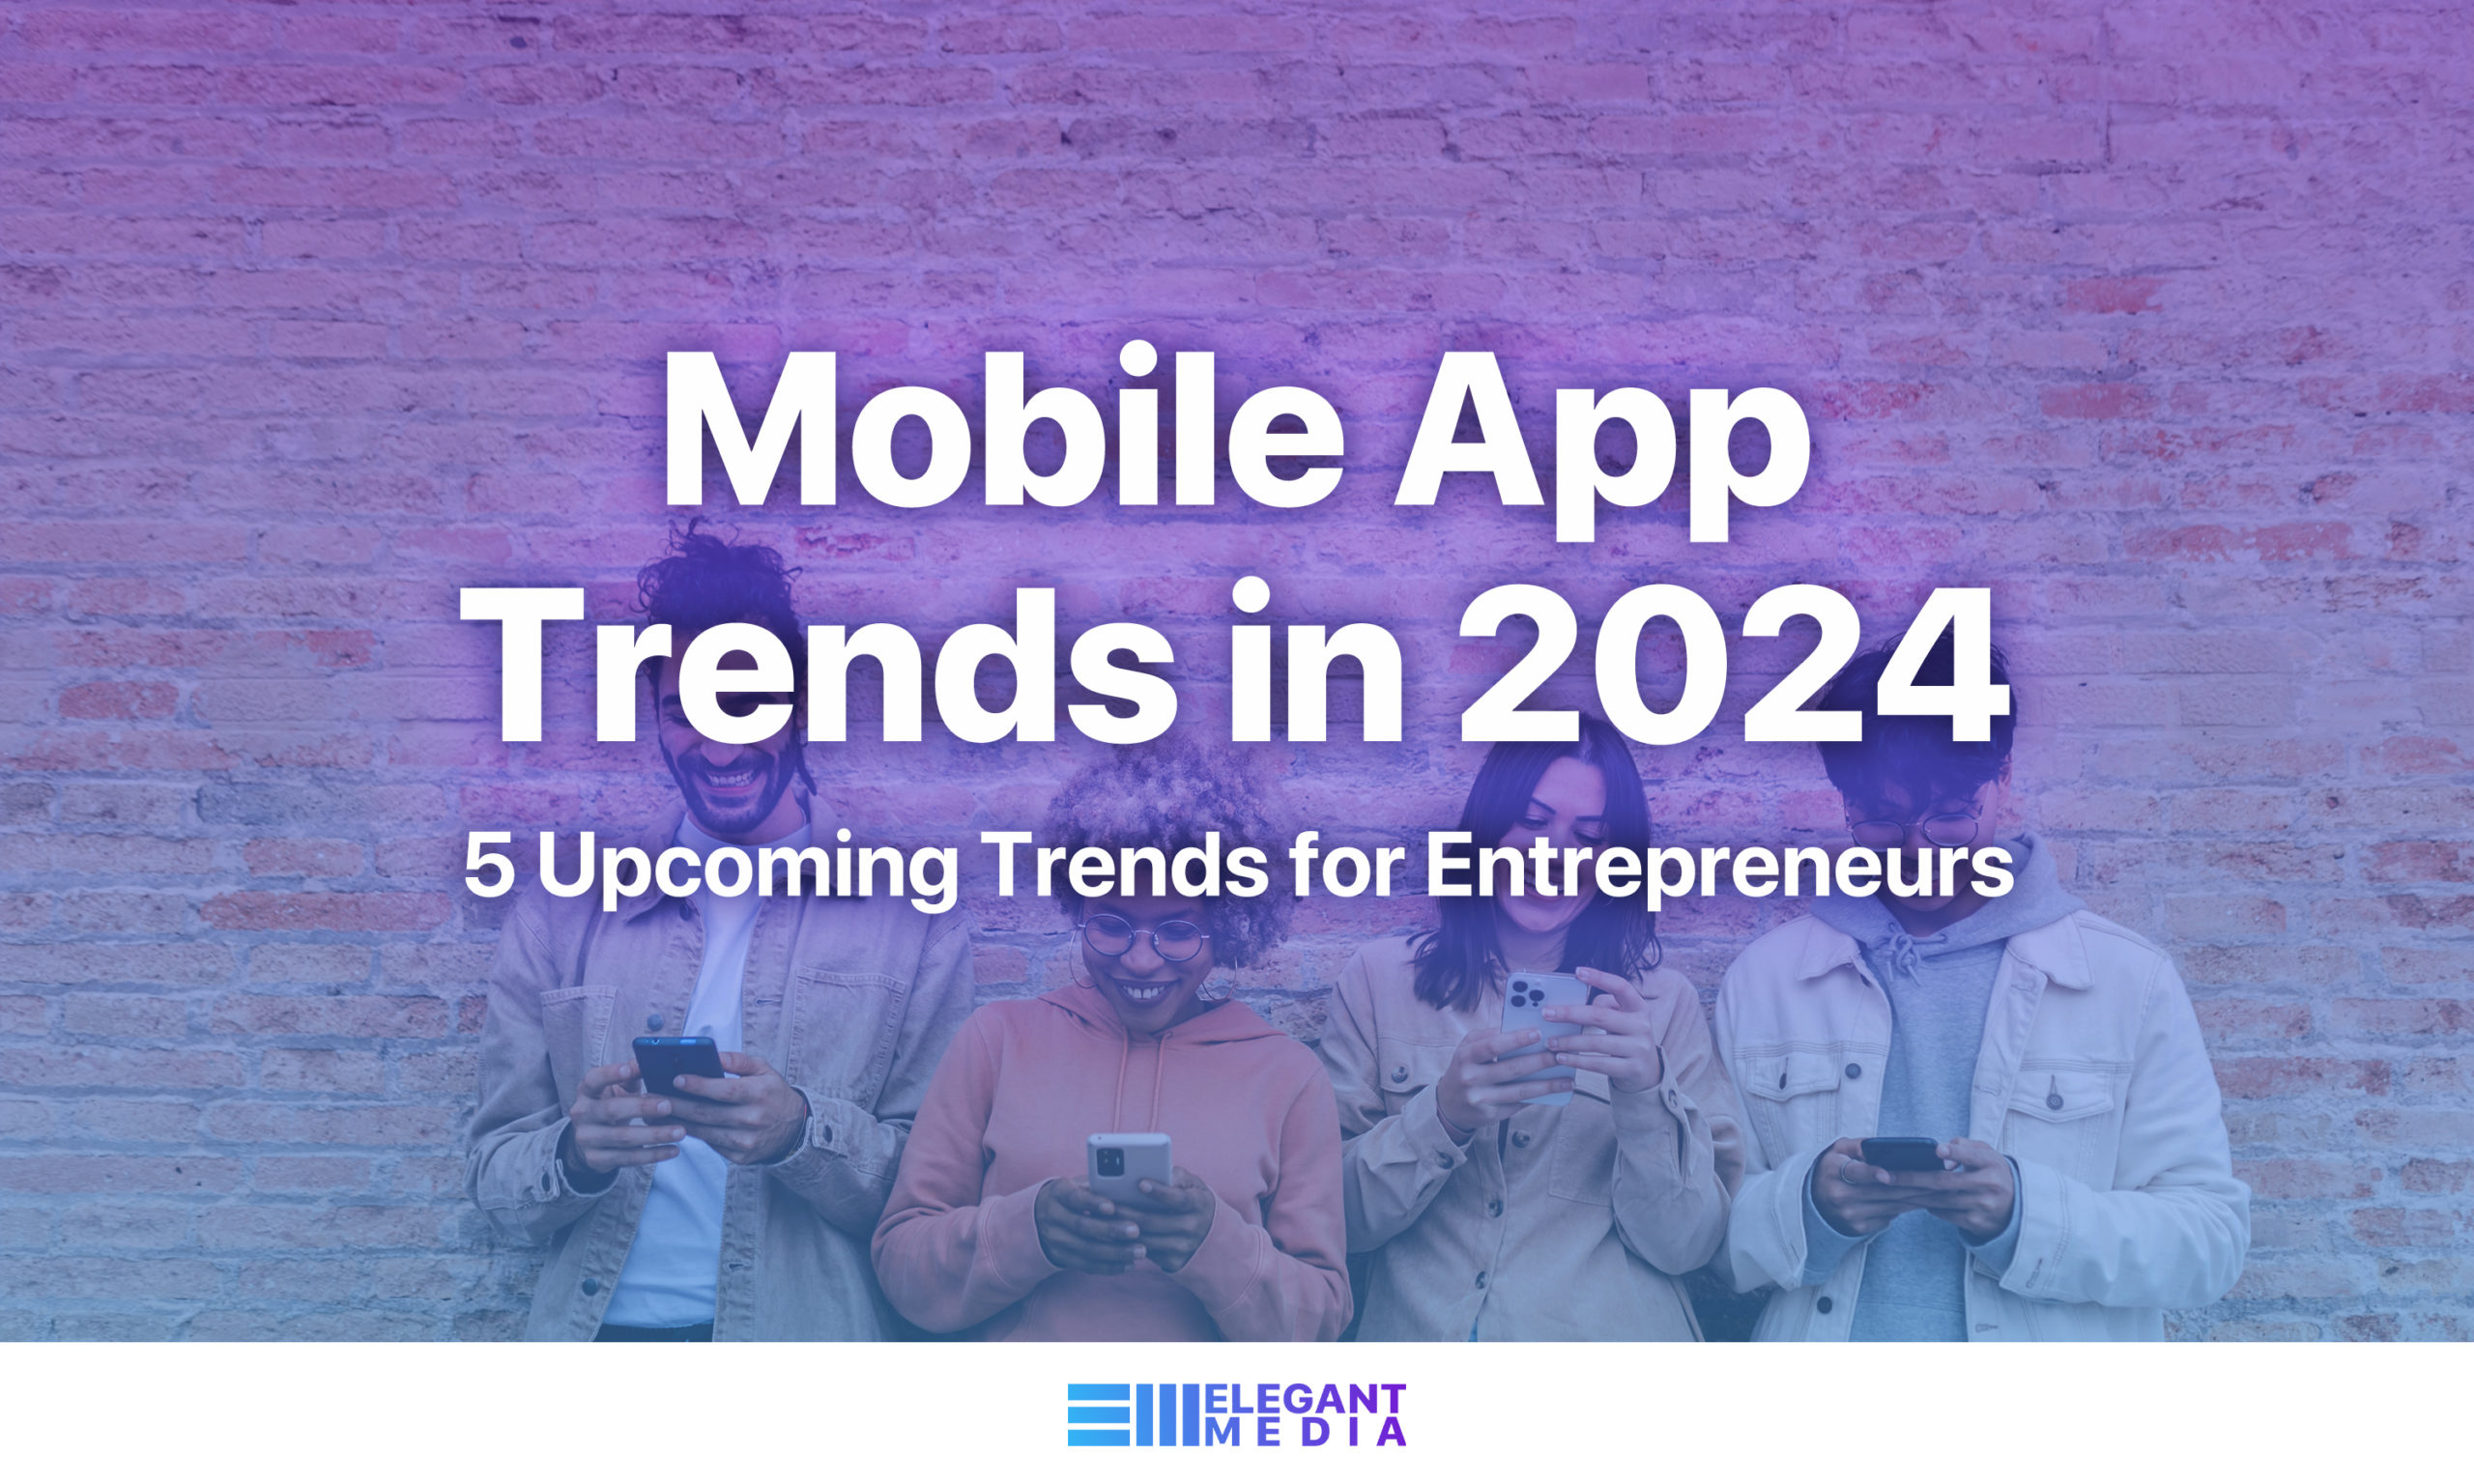 Mobile App Trends in 2024 - 5 Upcoming Trends for Entrepreneurs